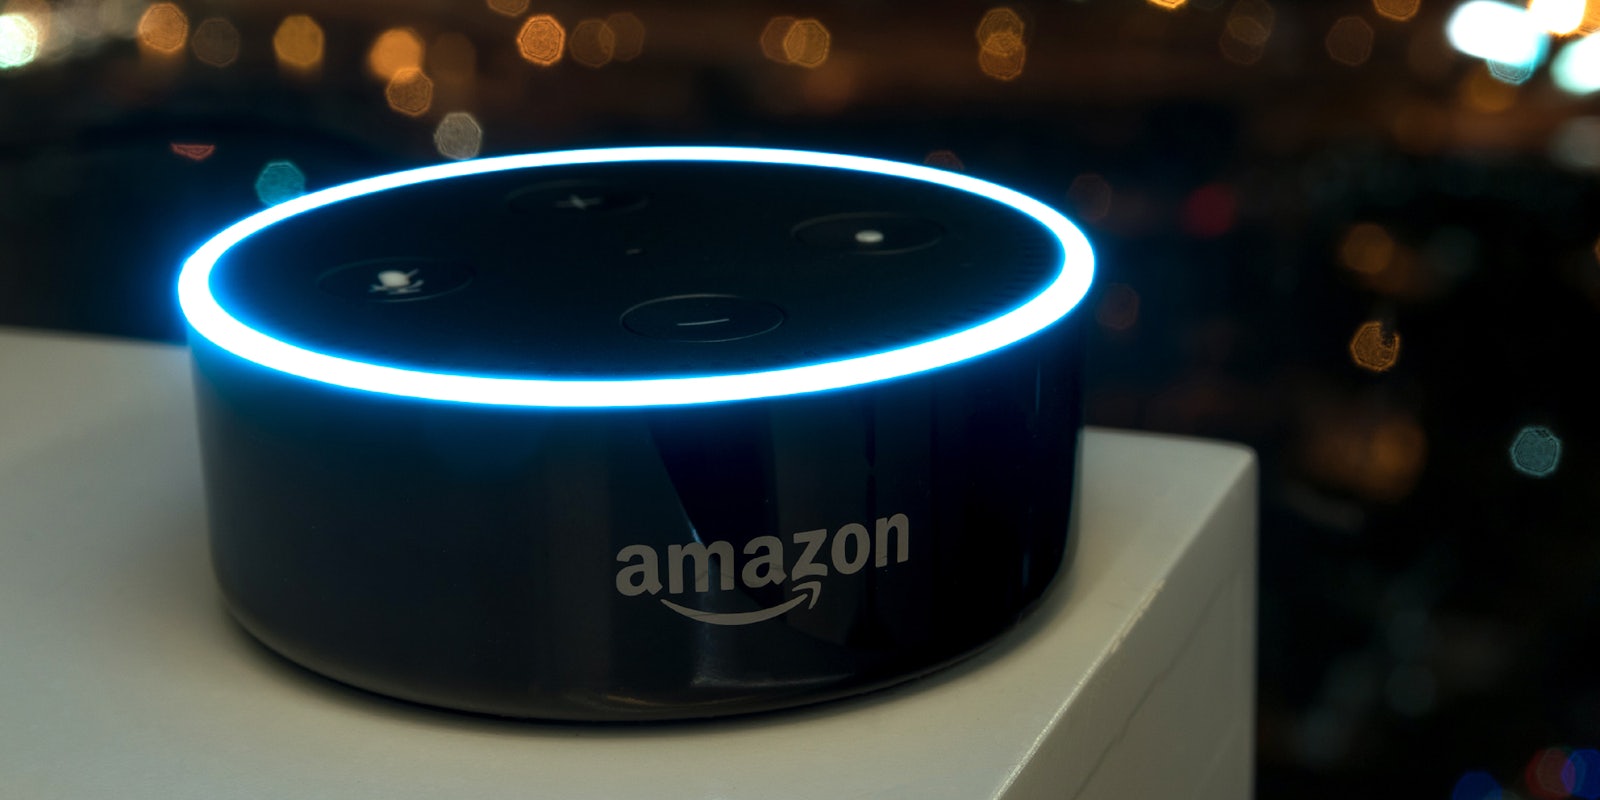 An Amazon Echo dot version 2 on a white table.